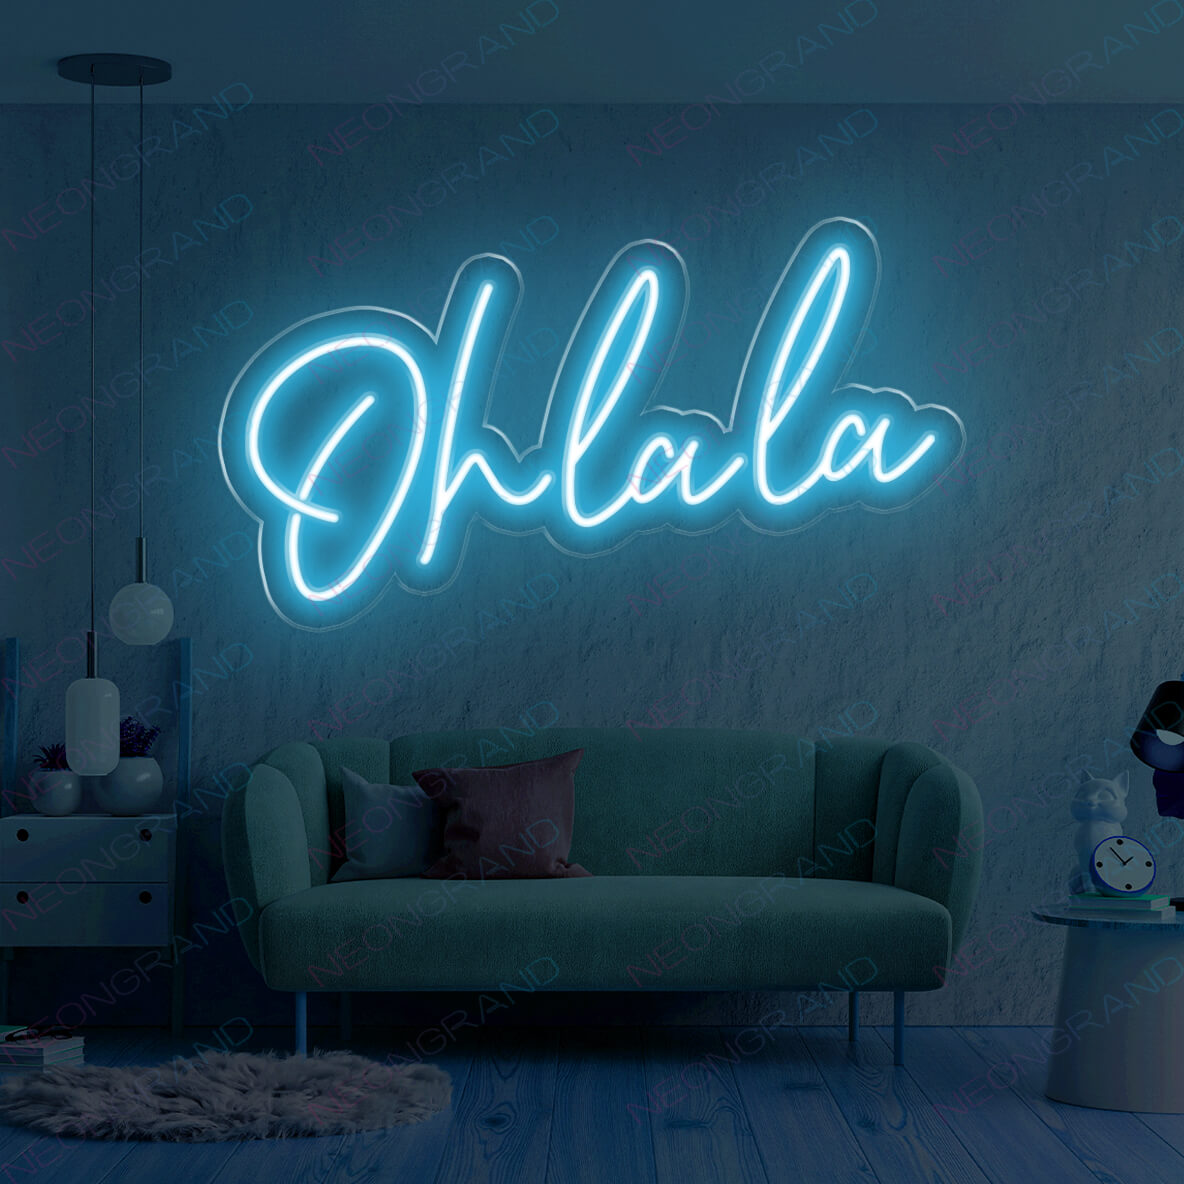 Oh La La Neon Sign Led Light light blue